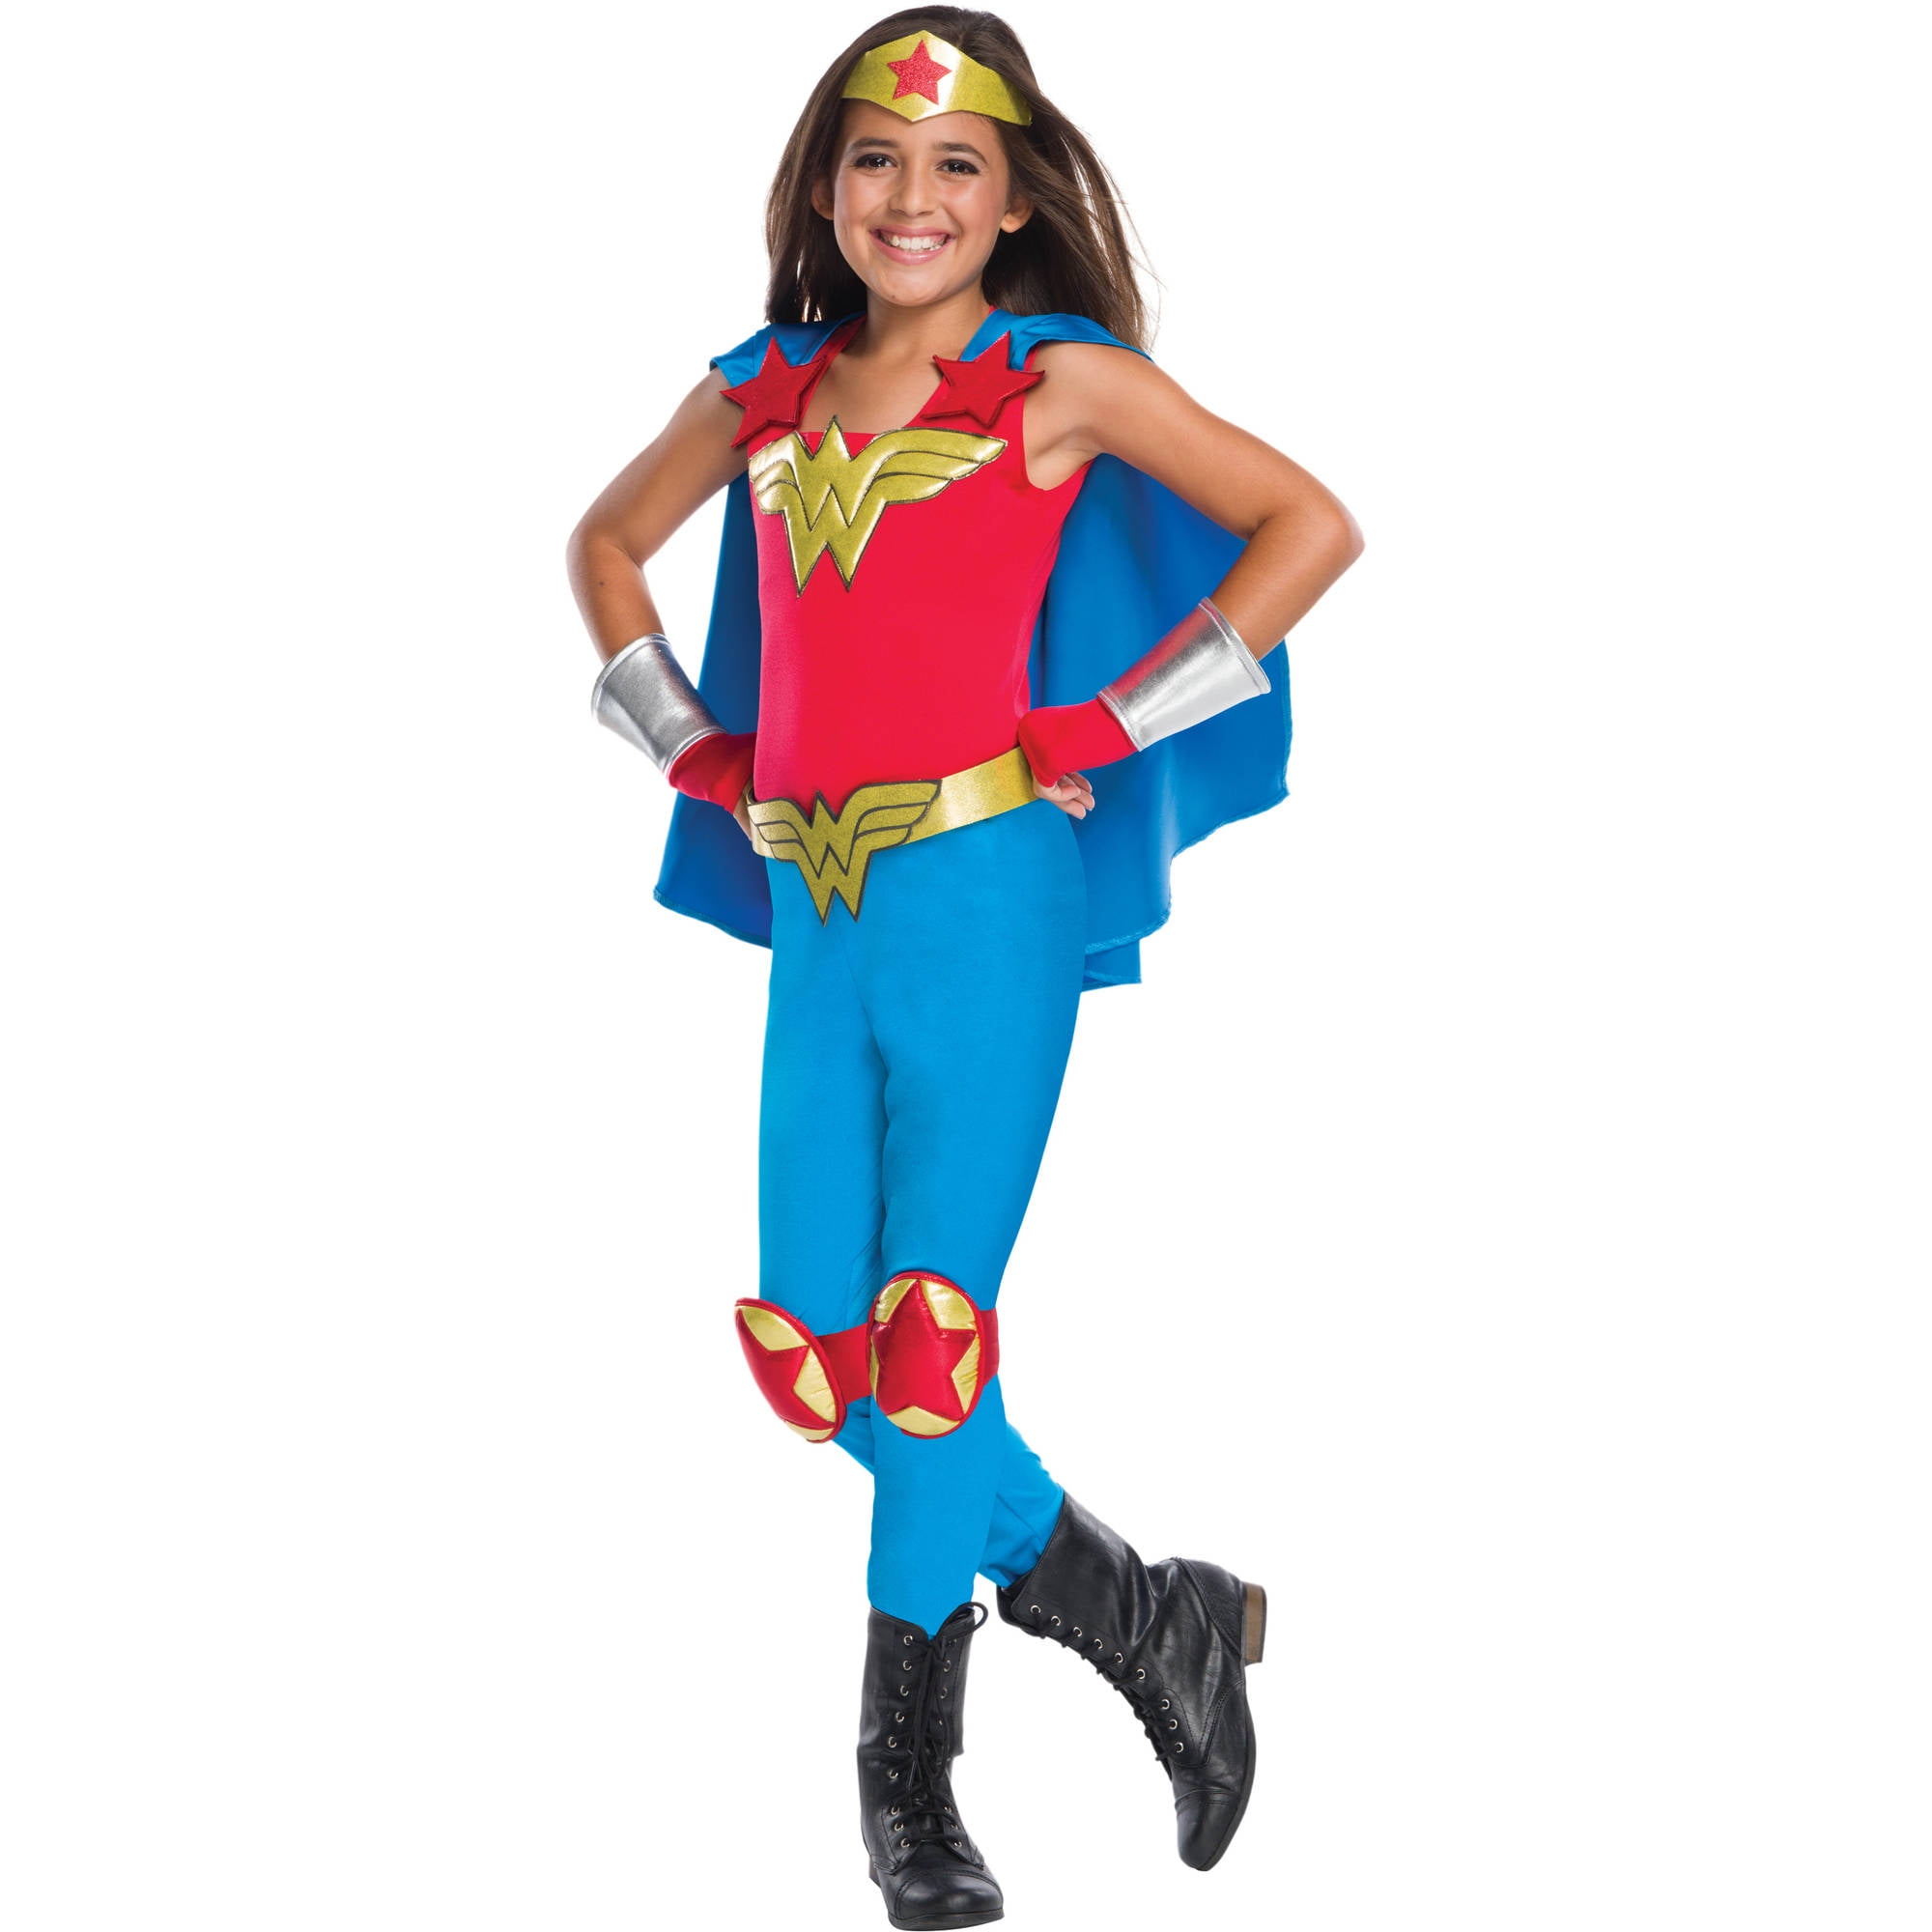 DC Girls Wonder Woman Child's Costume, Medium (8-10) - Walmart.com